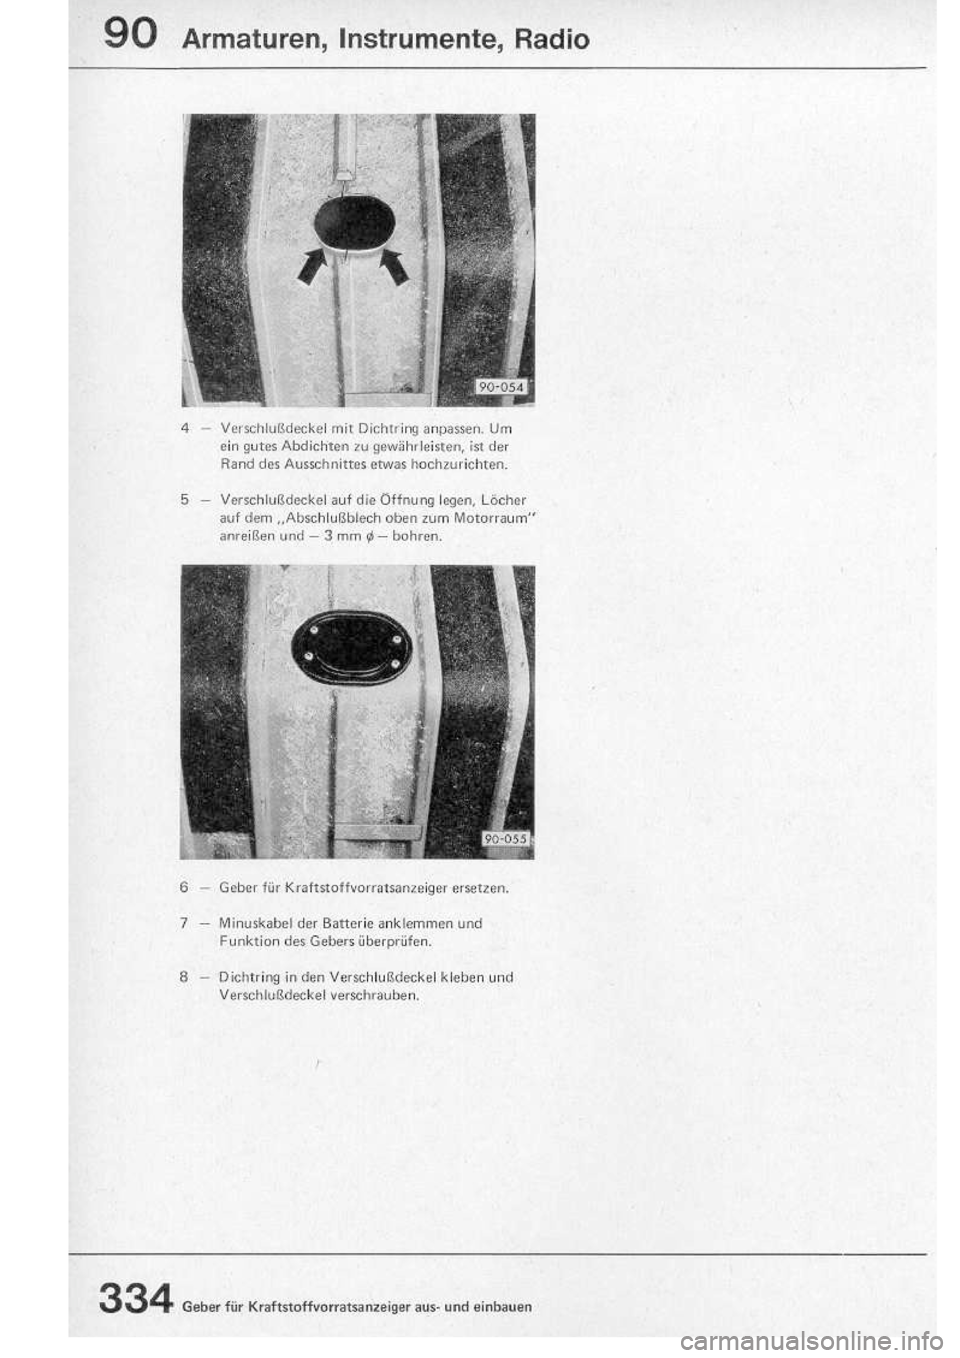 VOLKSWAGEN T2 1975  Repair Manual 
http://vwbus.dyndns.org/bulli/michaelk/vw_bus_d/rlf/10/334.jpg 